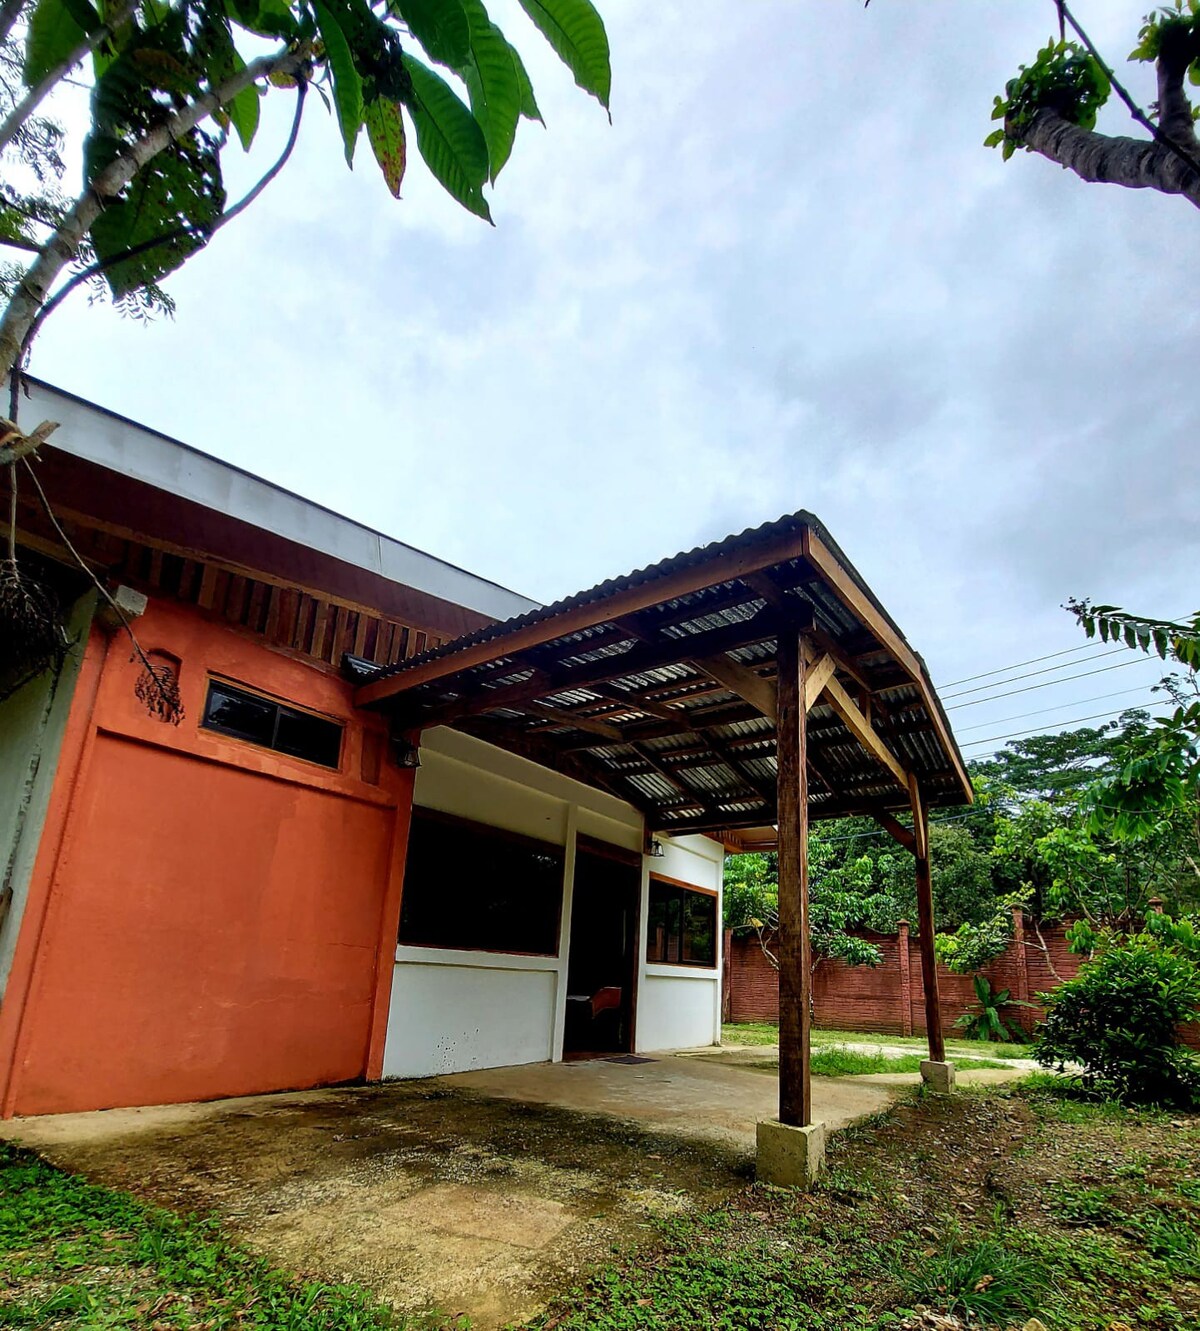 Rainforest: Colibrí Cabin - Canto del Tucán Lodge